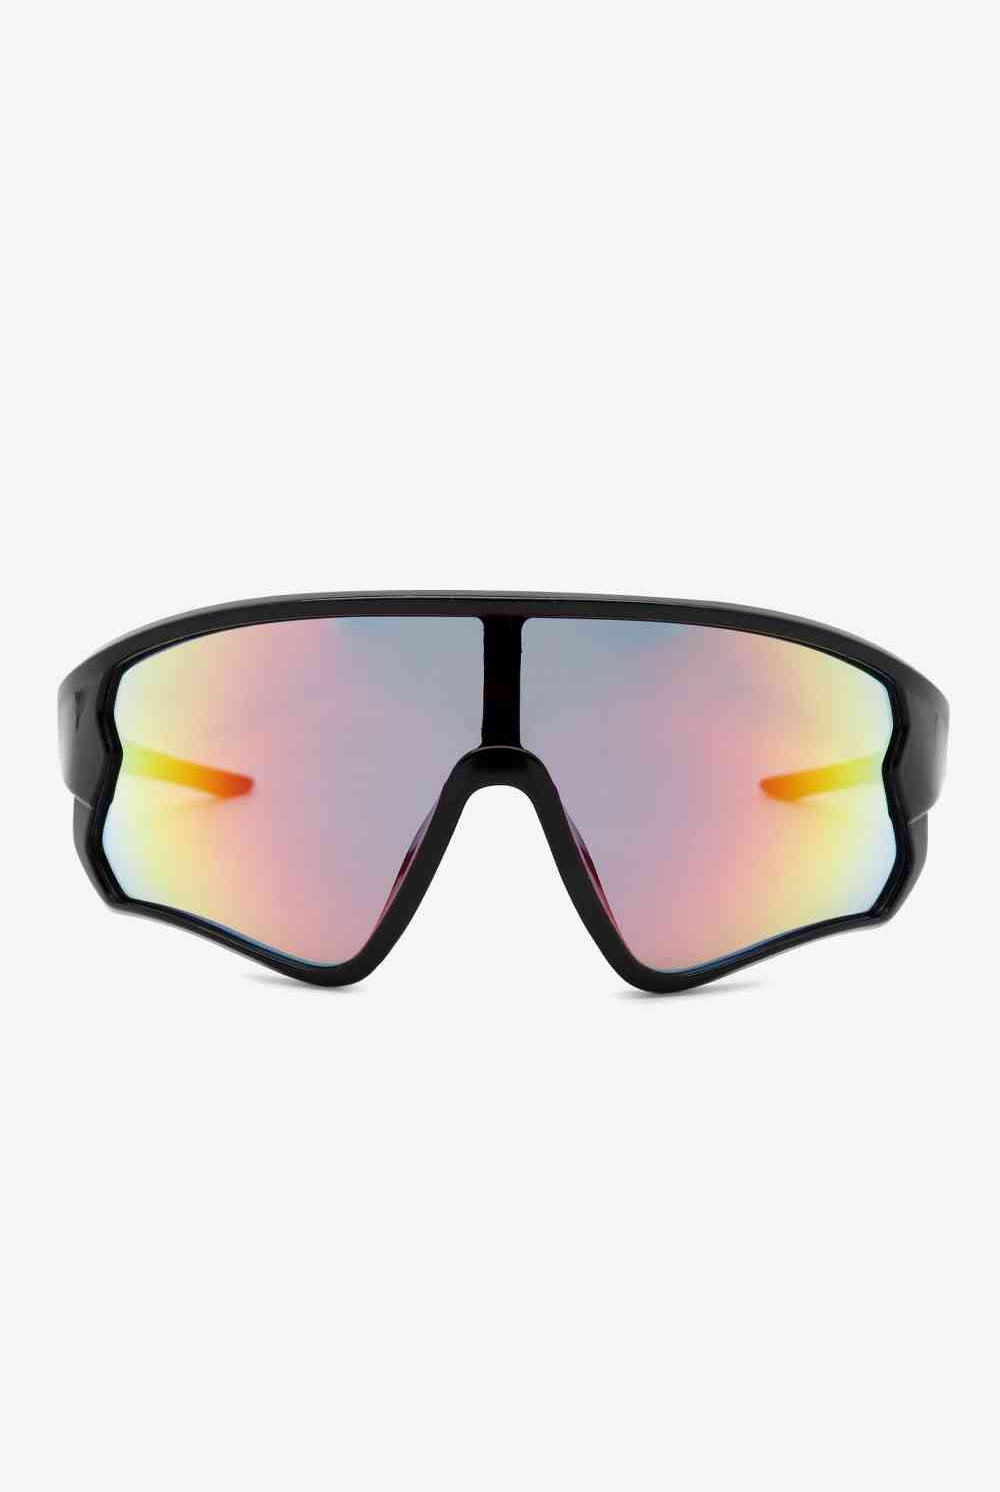 Spectrum Shield Sunglasses - GemThreads Boutique Spectrum Shield Sunglasses